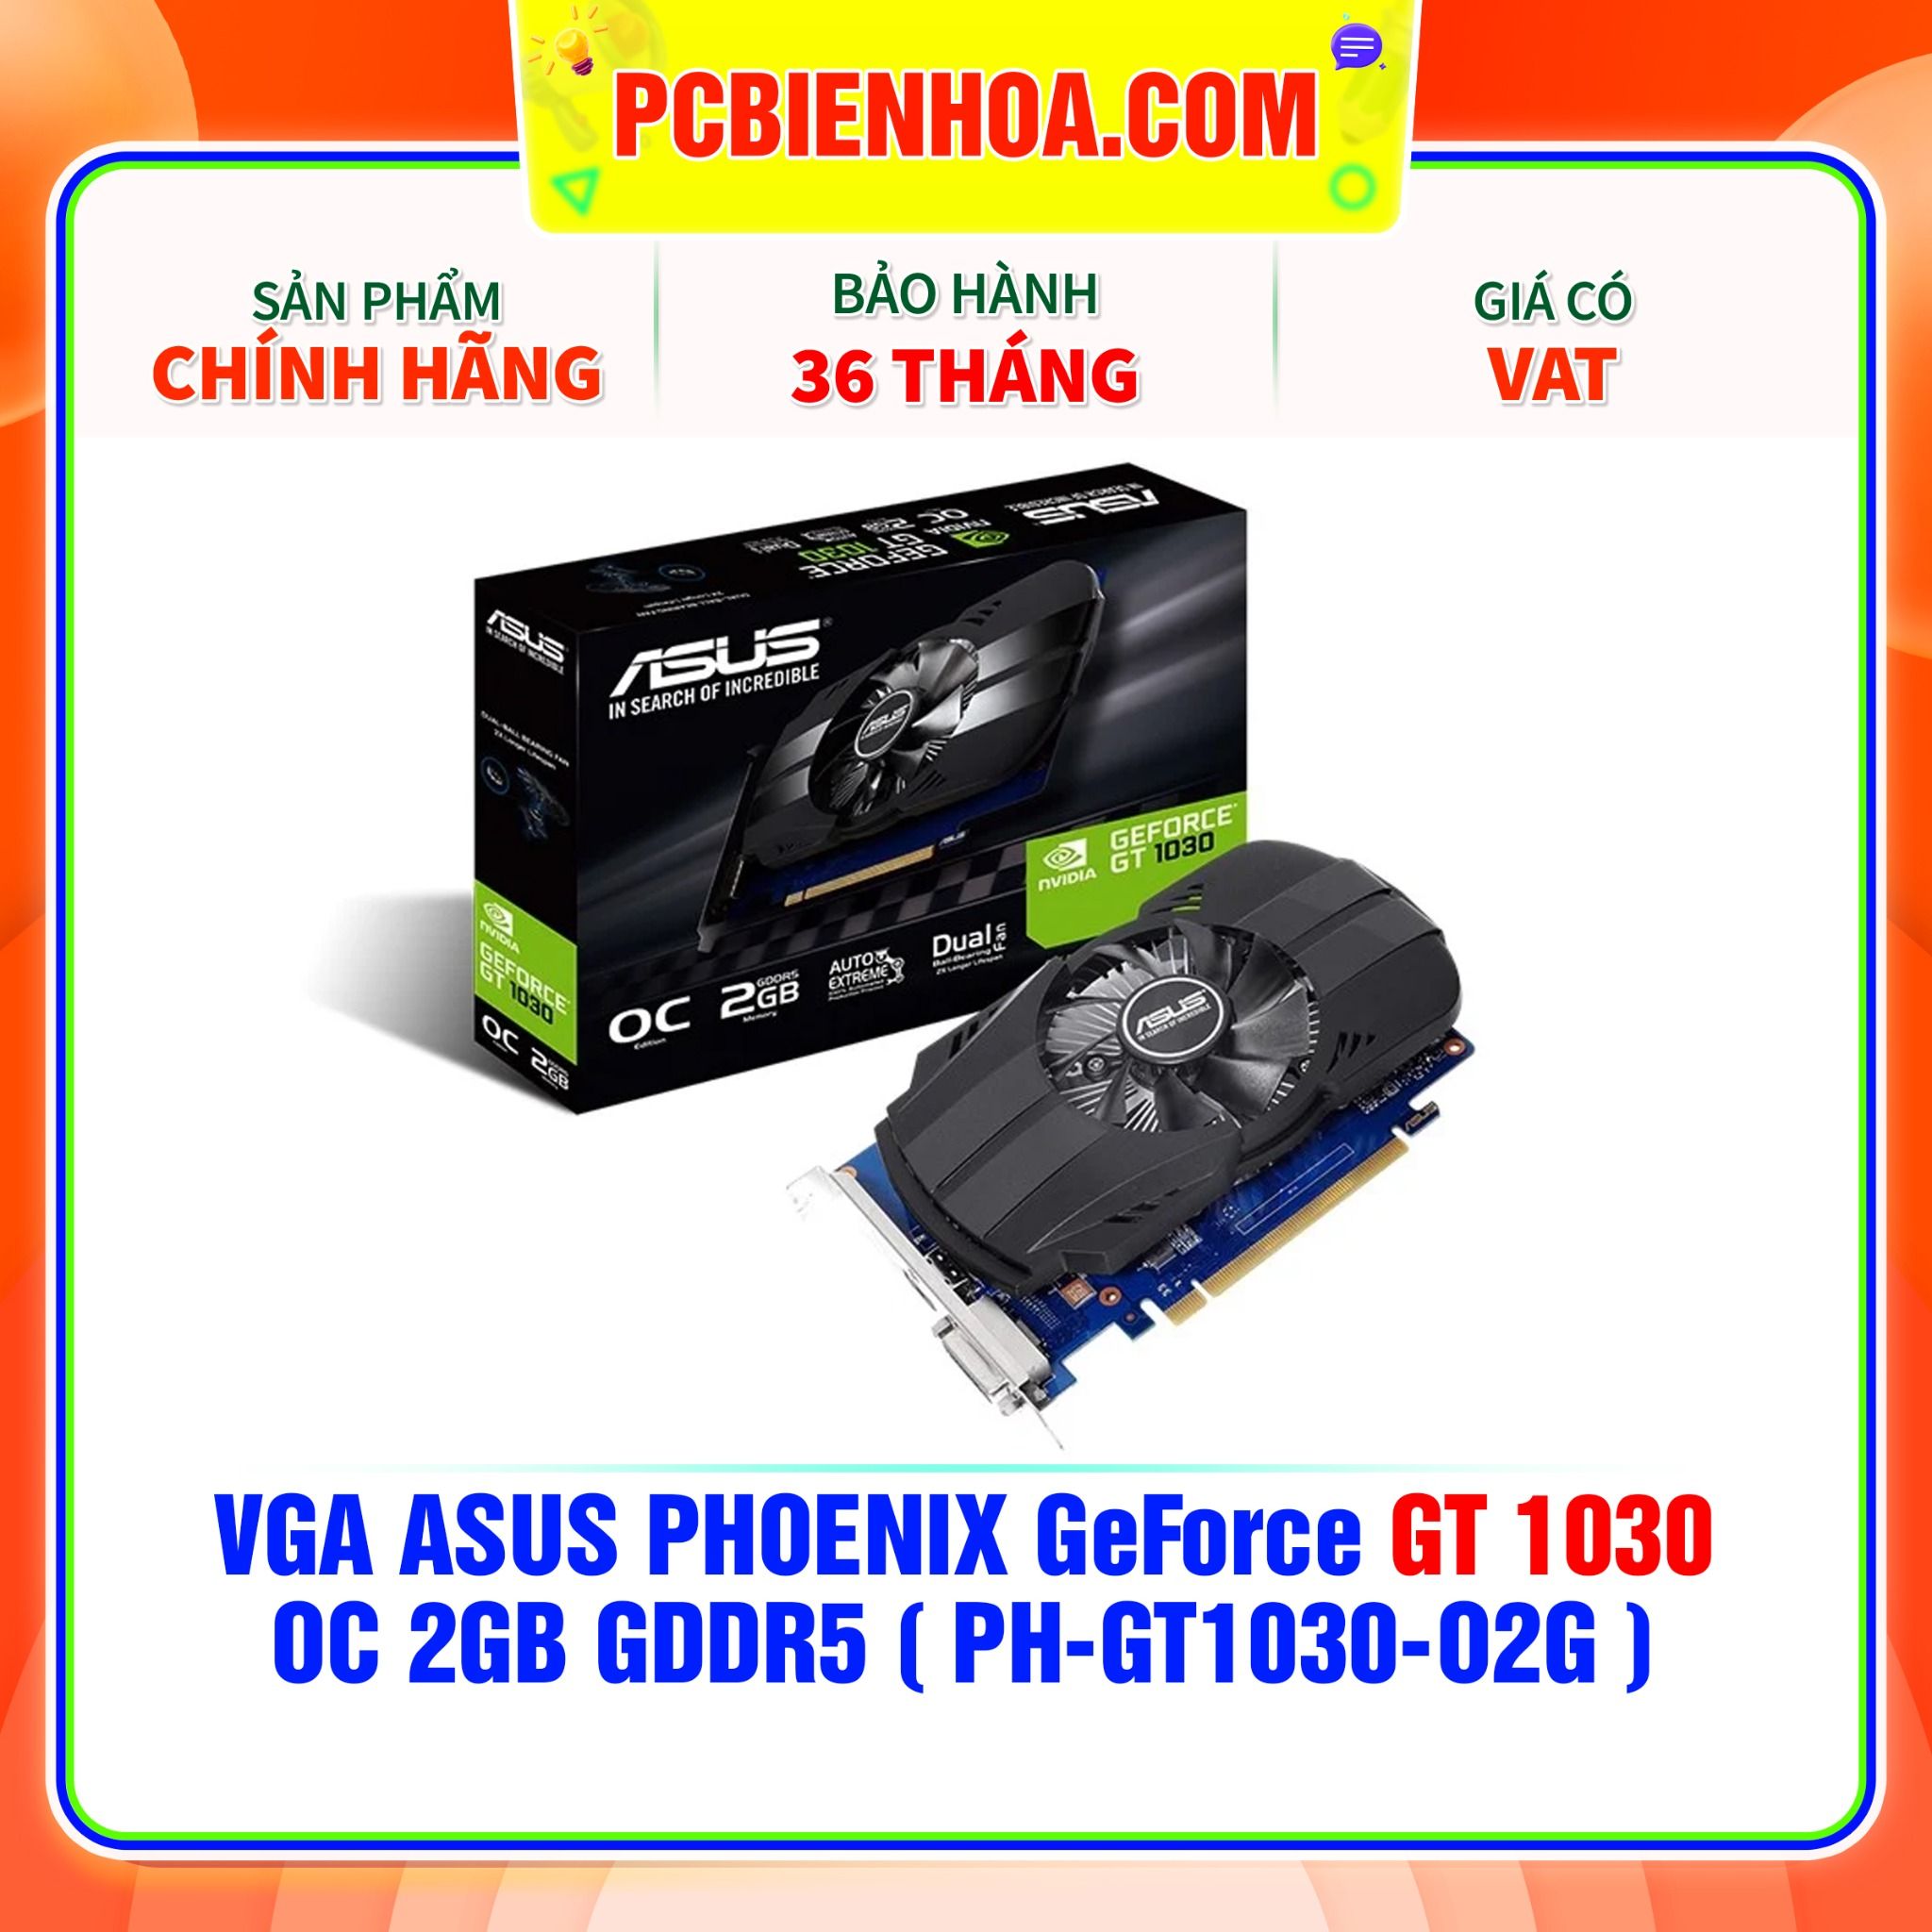  VGA ASUS PHOENIX GeForce GT 1030 OC 2GB GDDR5 ( PH-GT1030-O2G ) 